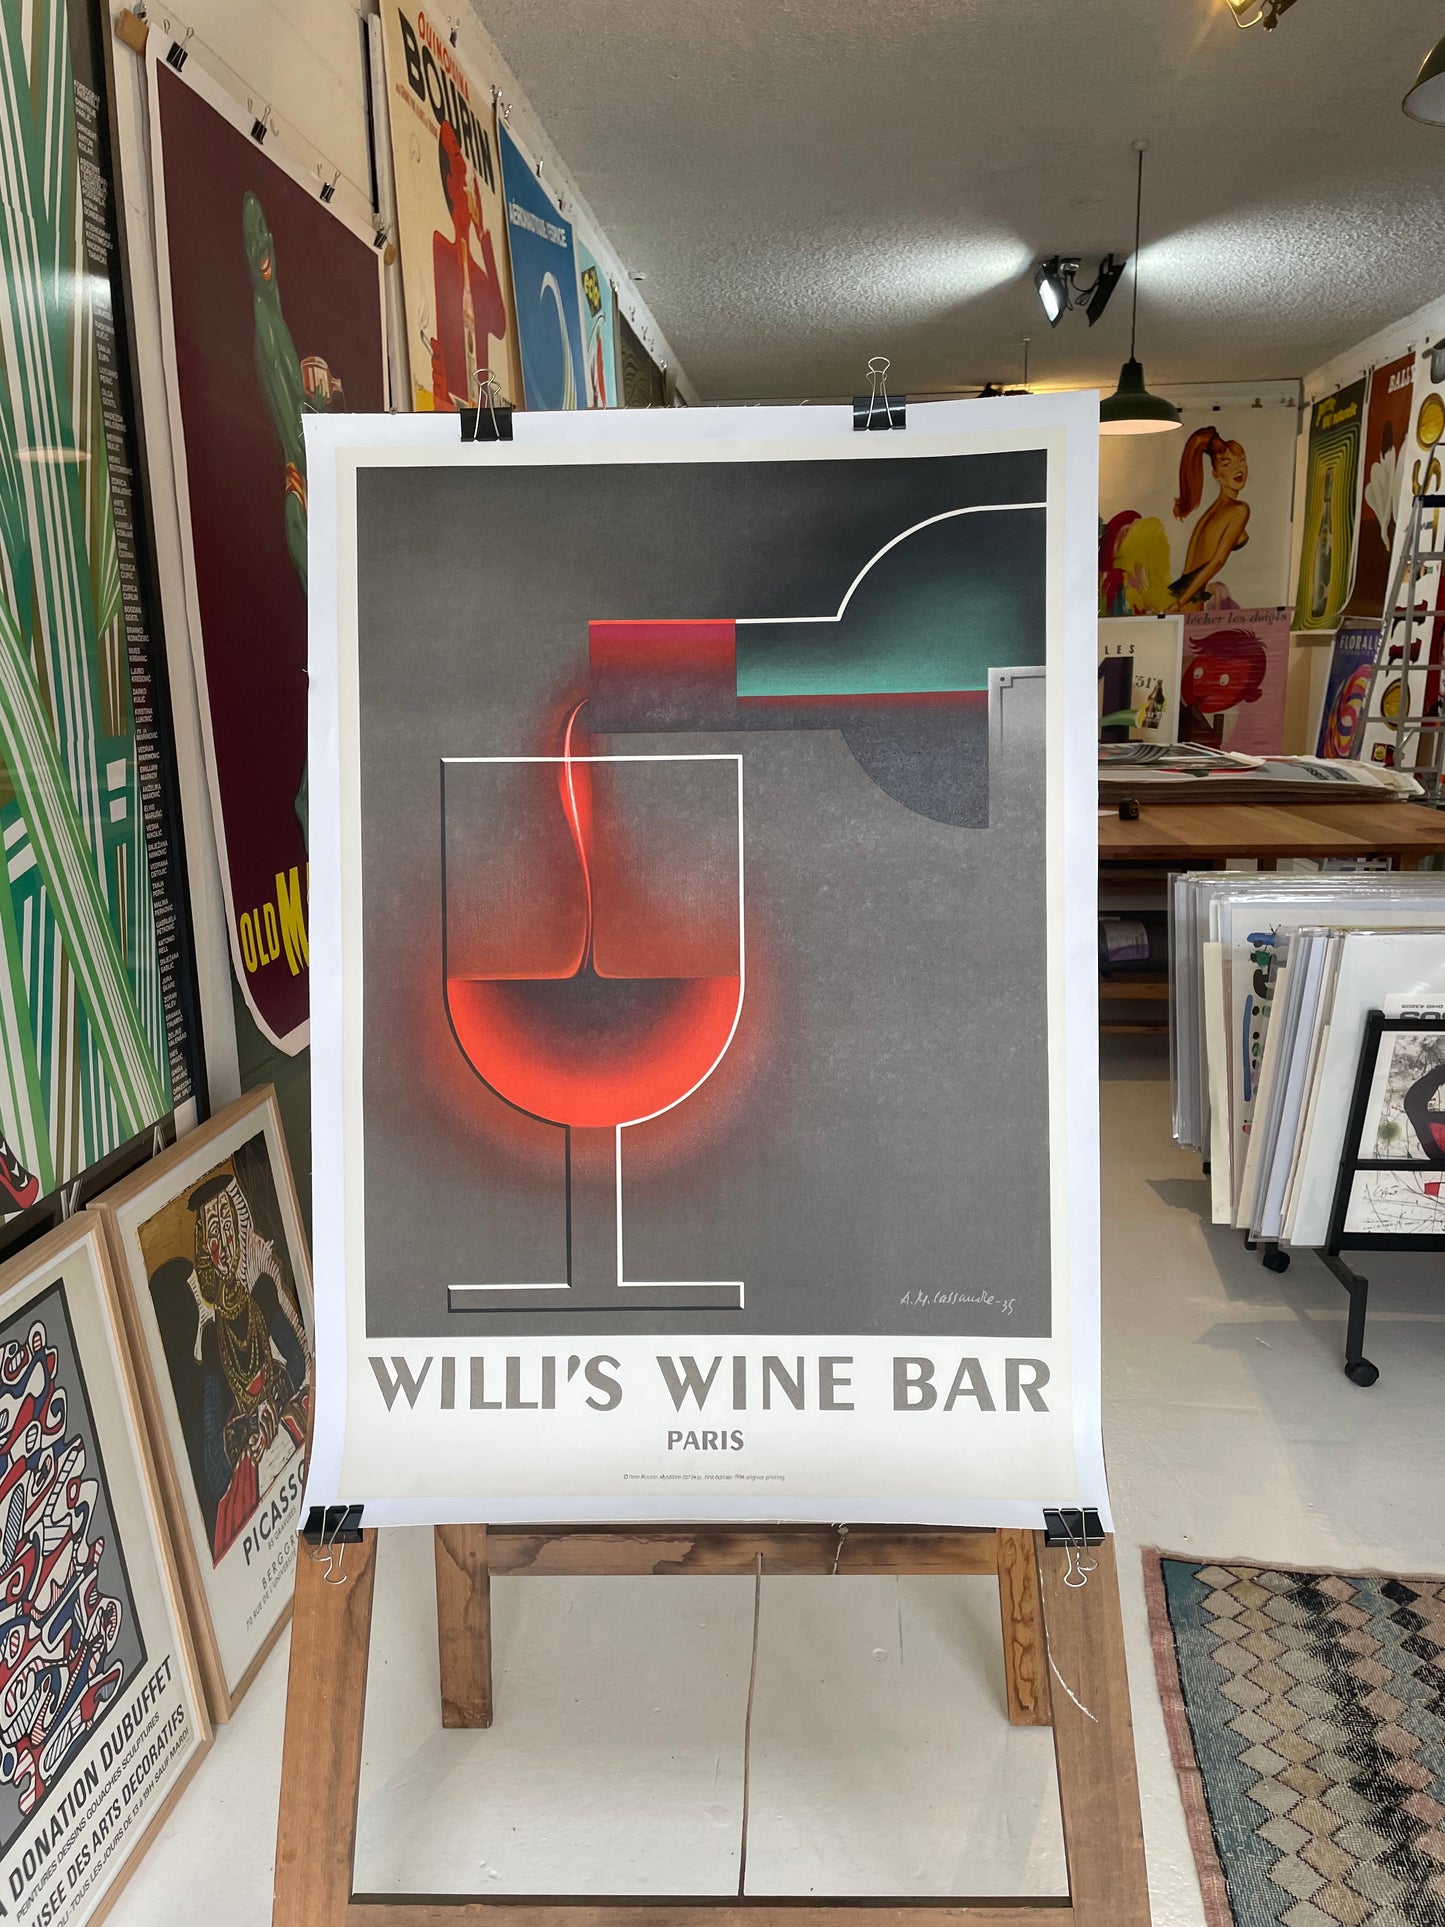 Willi's Wine Bar Paris by A.M. Cassandre